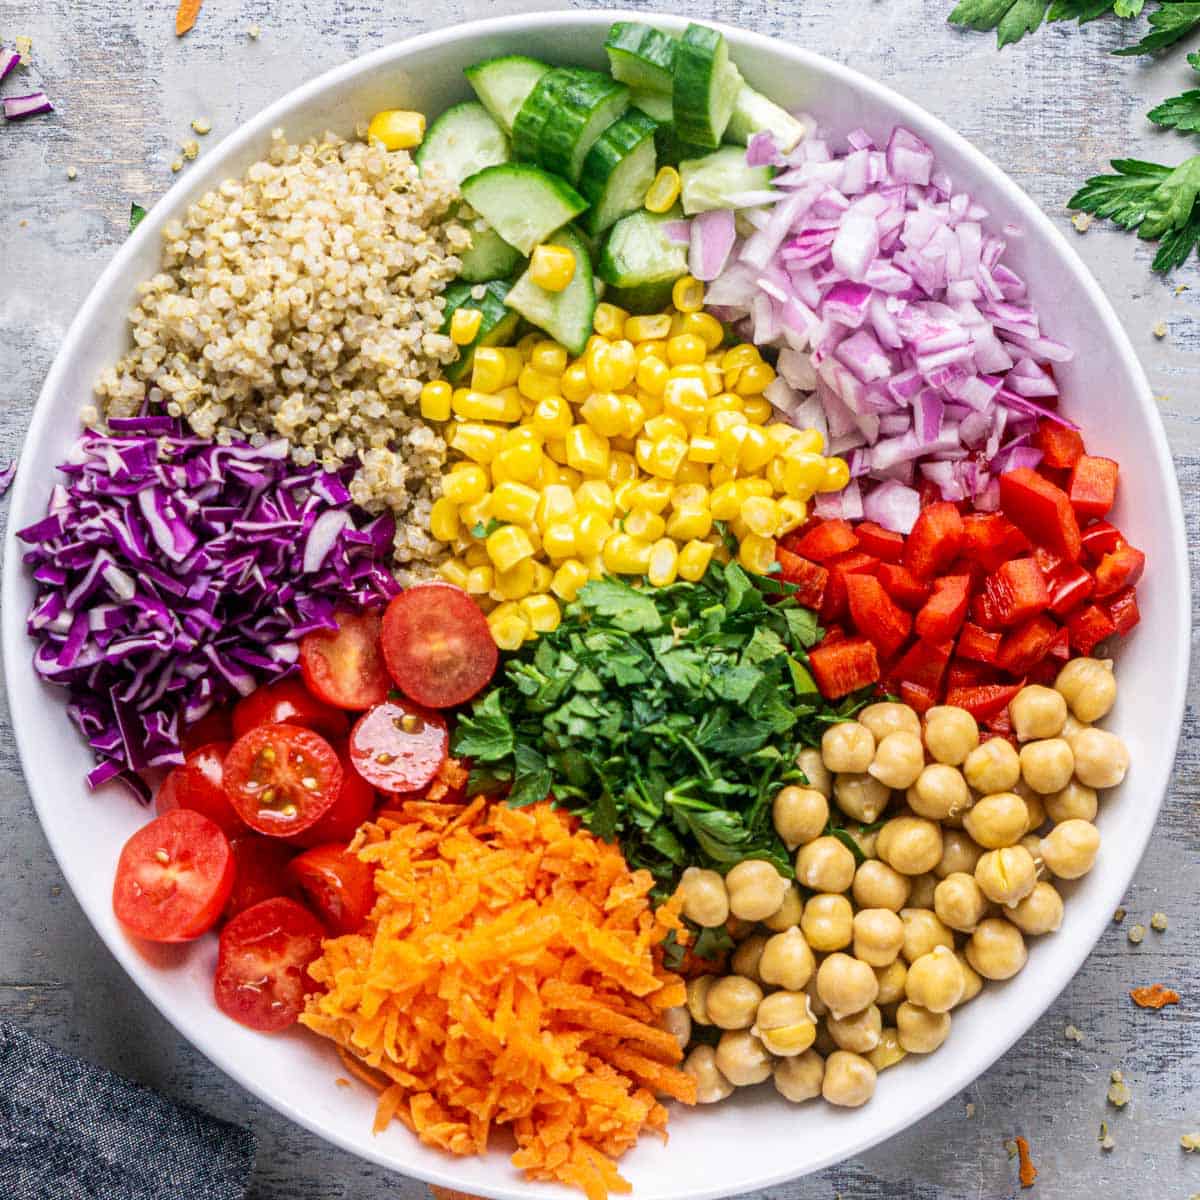 https://thekitchengirl.com/wp-content/uploads/vegetable-quinoa-salad-recipe-A_10-copy.jpg